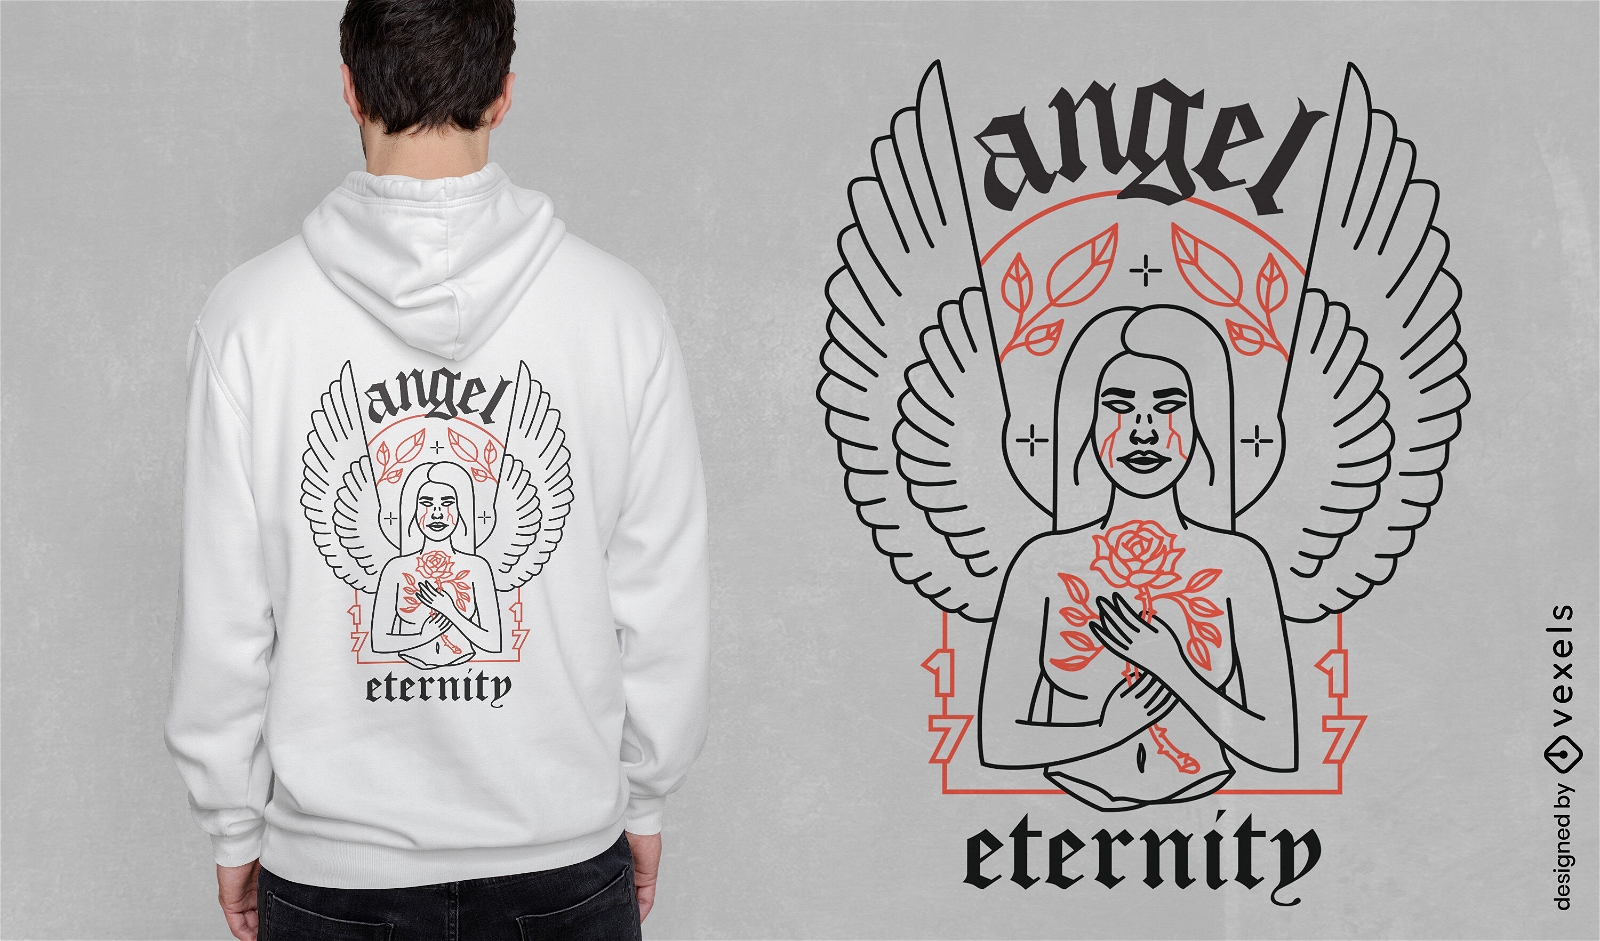 Angel eternity t-shirt design